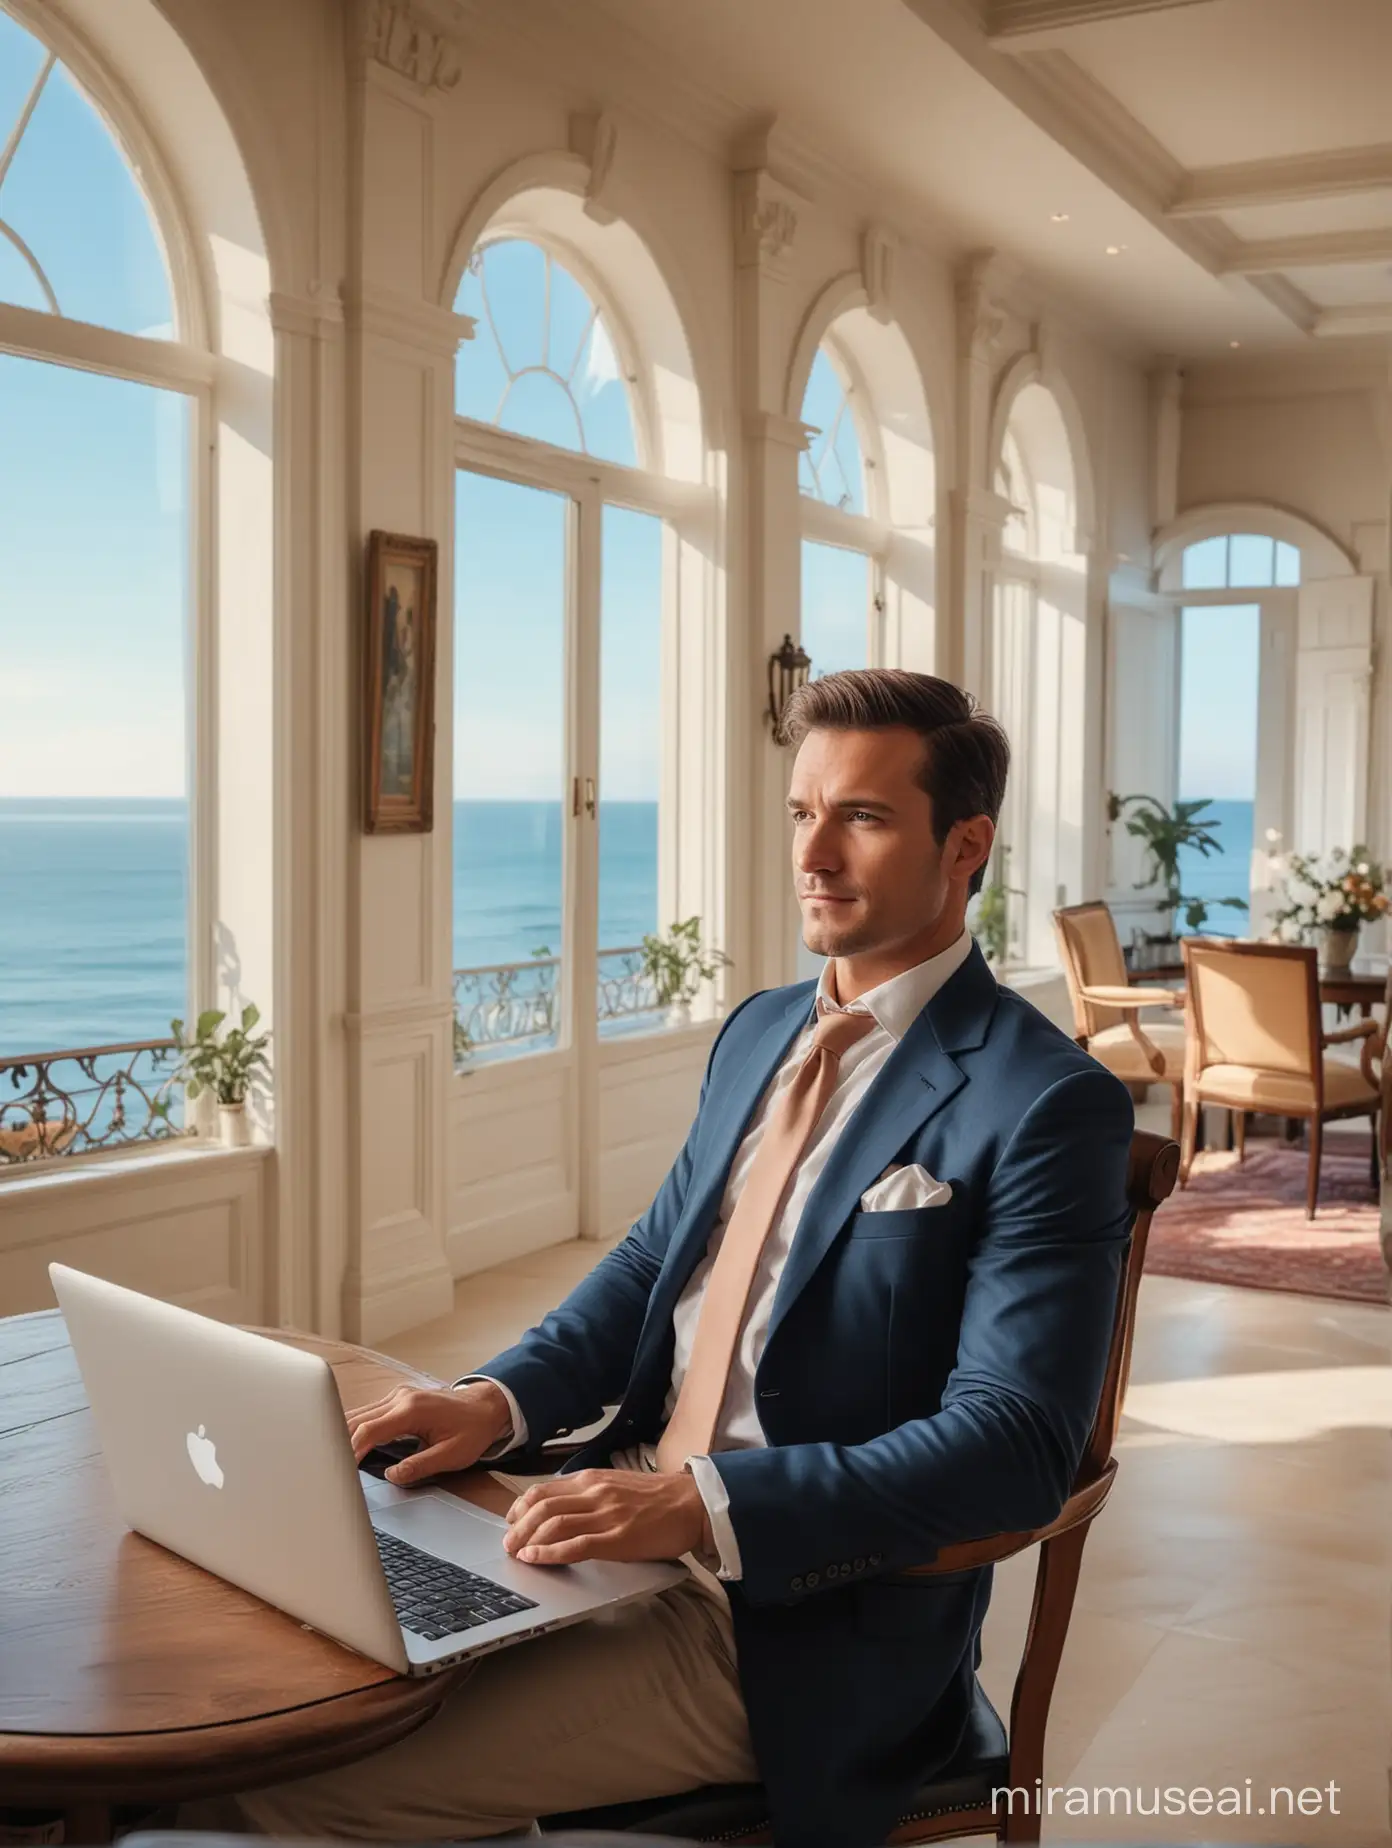 American Entrepreneur Analyzing Sales Data in Coastal Mansion